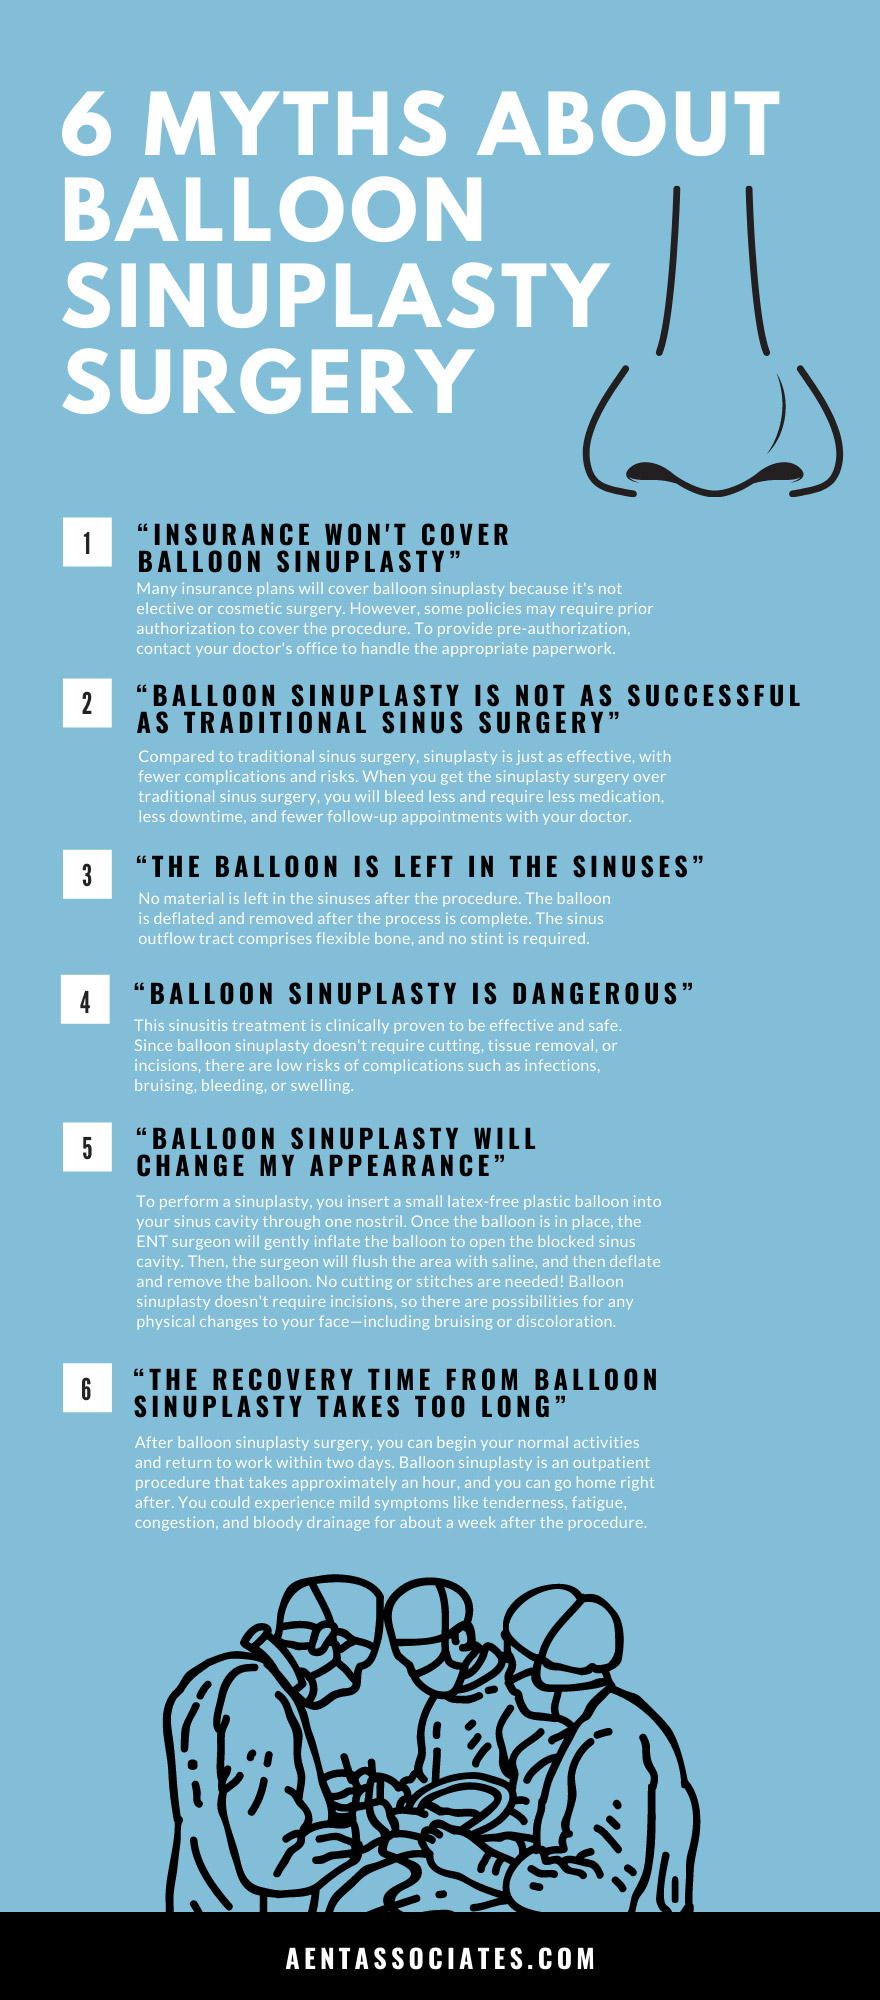 6 Myths About Balloon Sinuplasty Surgery